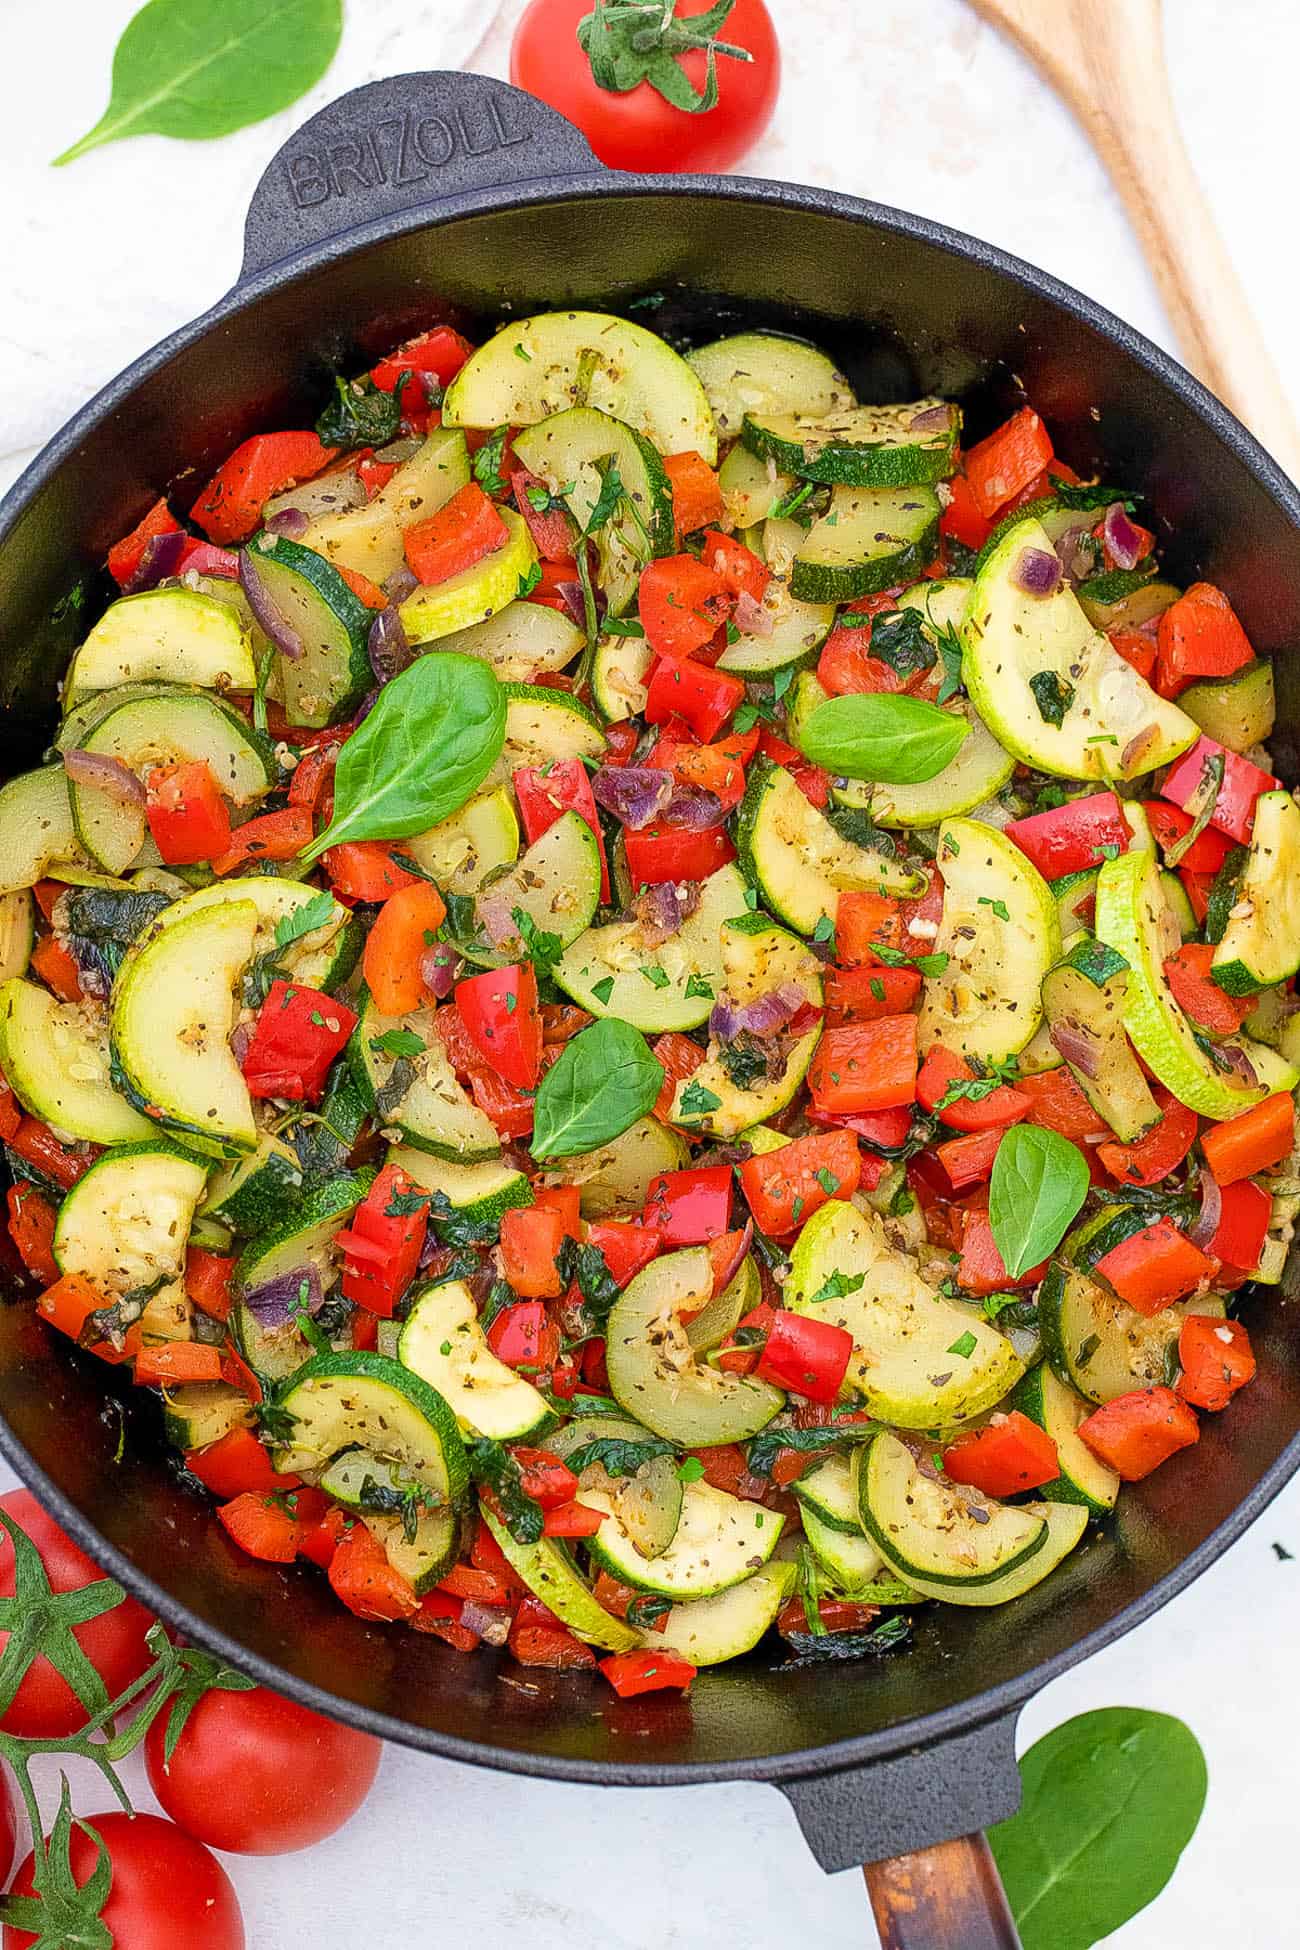 veggies cooking in a pan